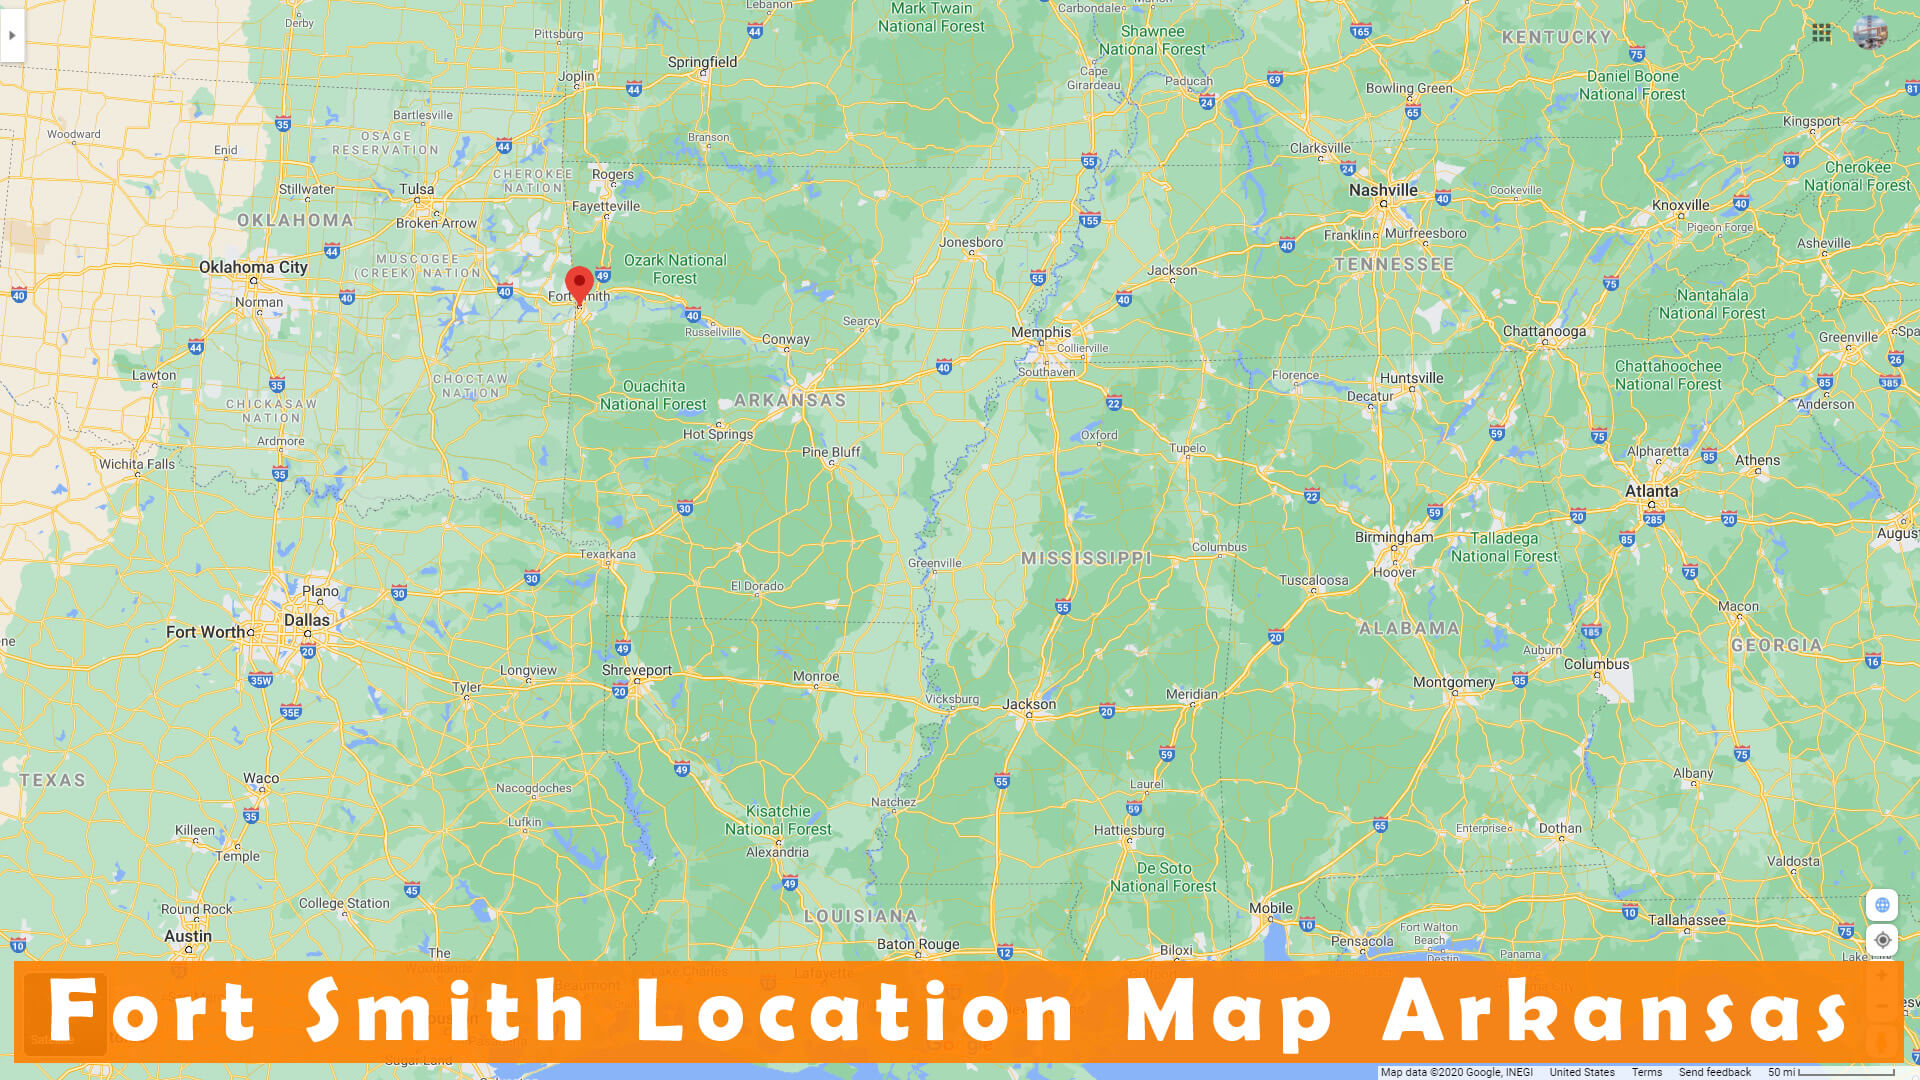 Fort Smith Location Map Arkansas